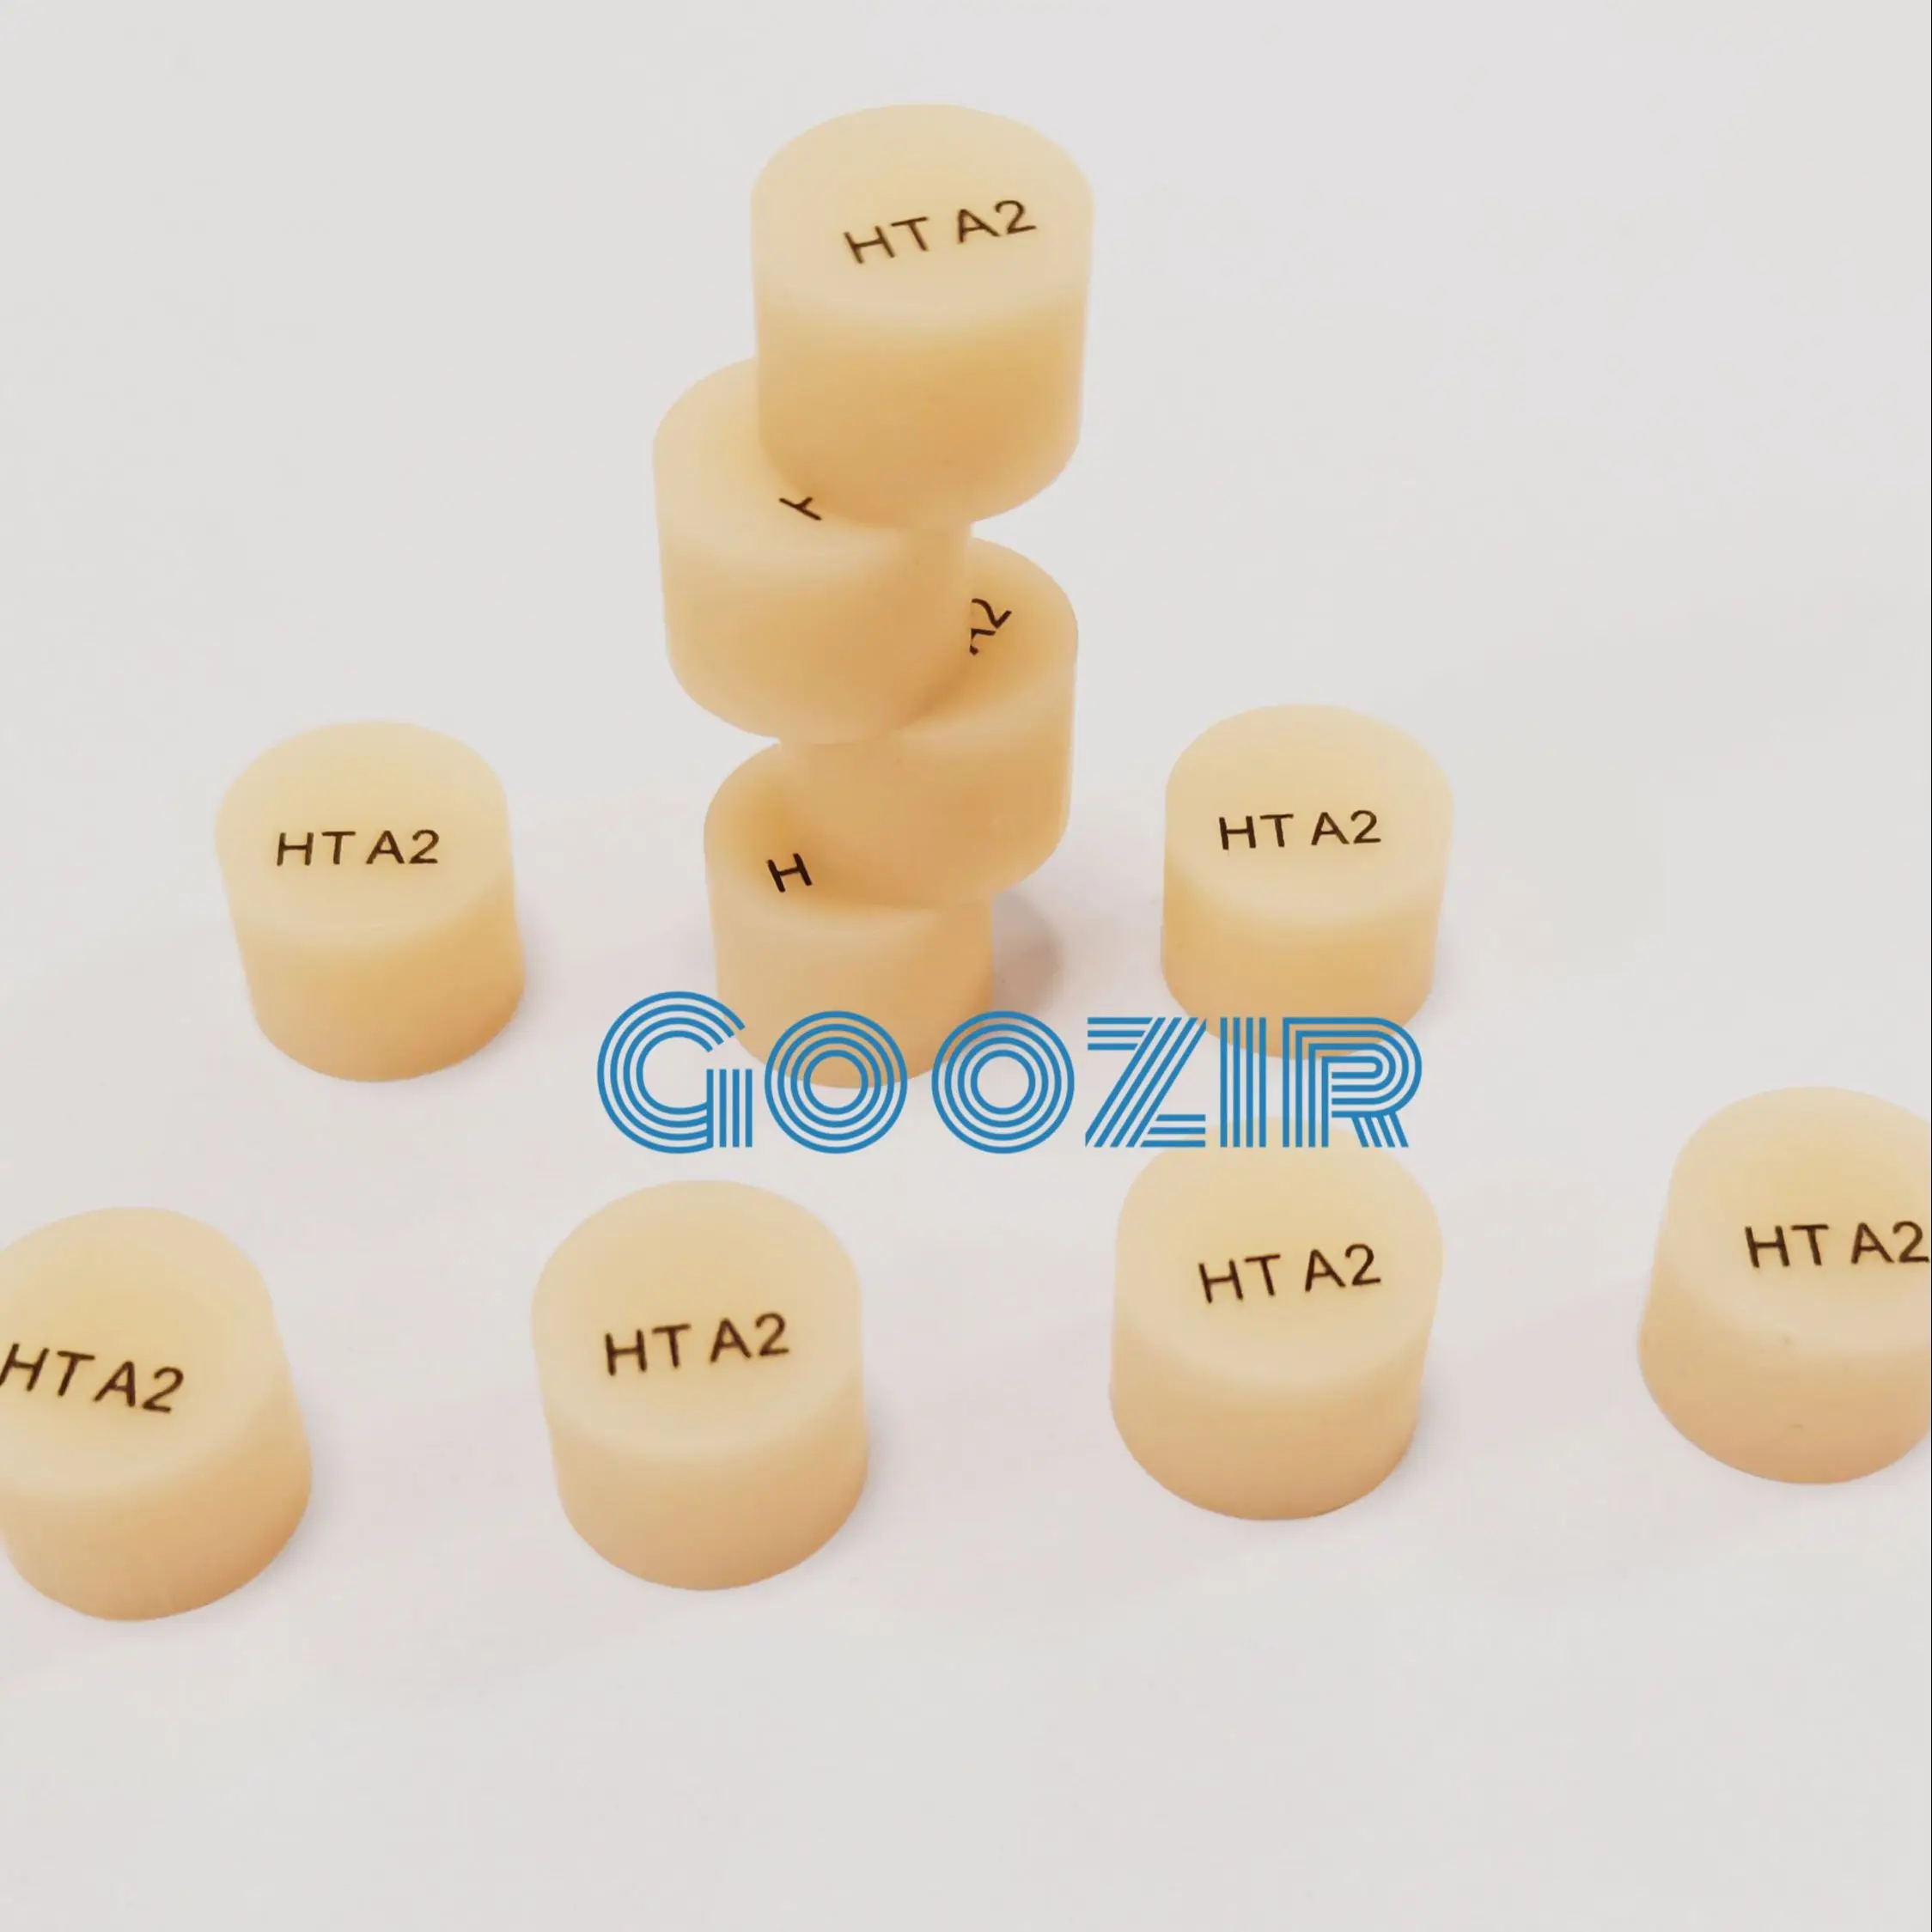 

Goozir Best Selling Denture Material High Translucent 5PCS HT/LT Press Lithium Disilicate Press Ingots for Dental Lab